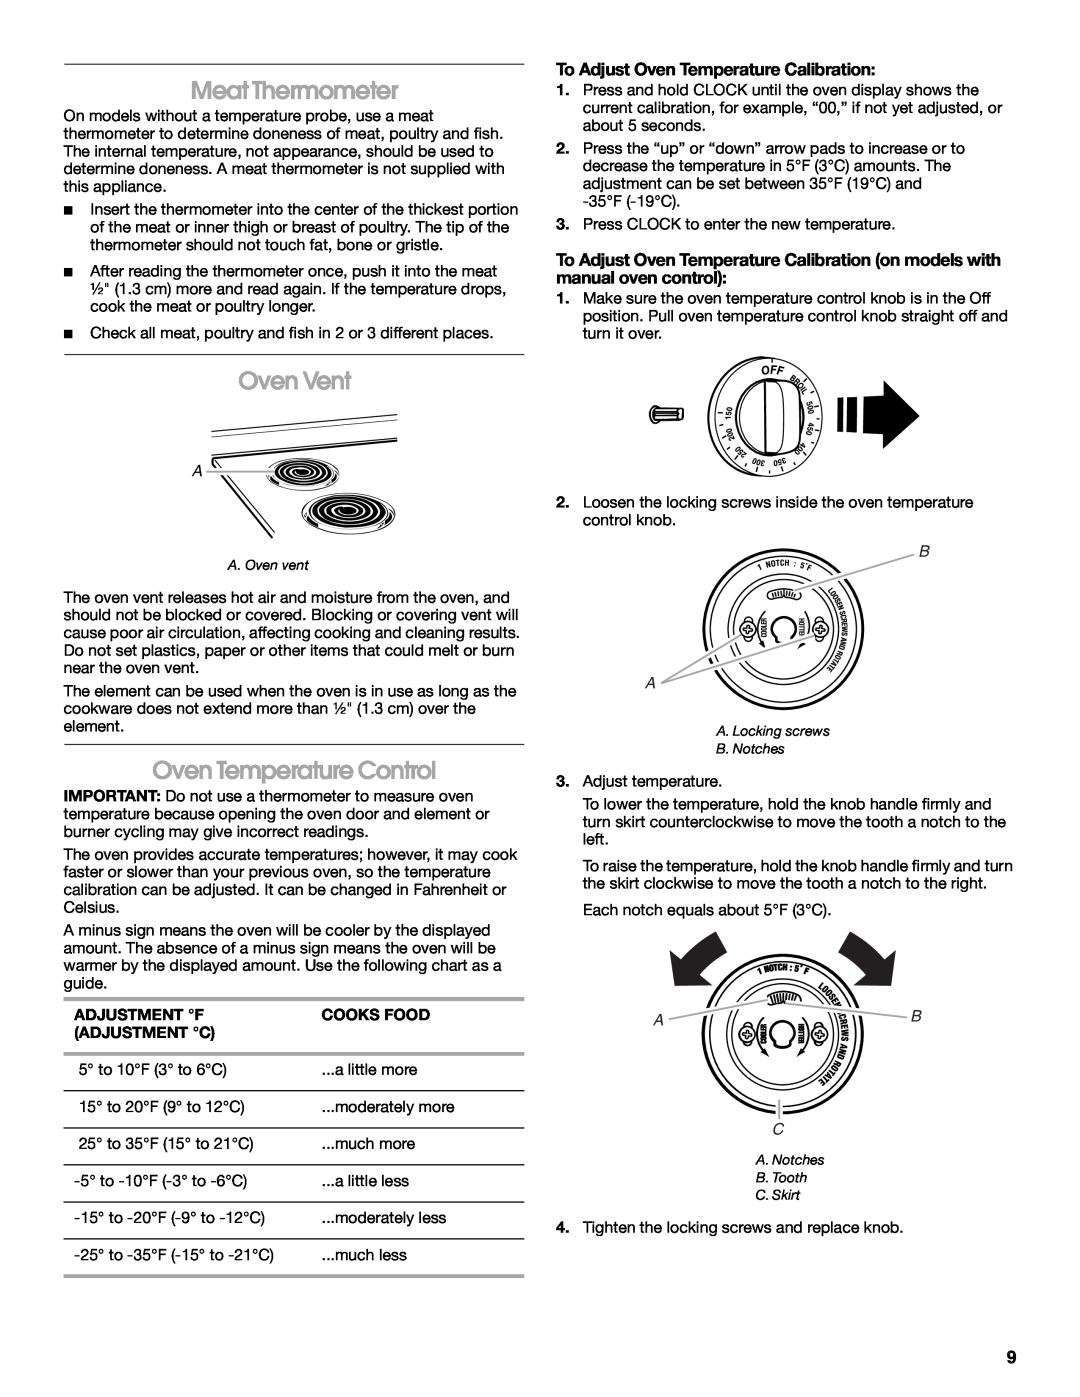 Estate W10017740 Meat Thermometer, Oven Vent, Oven Temperature Control, To Adjust Oven Temperature Calibration, A B C 